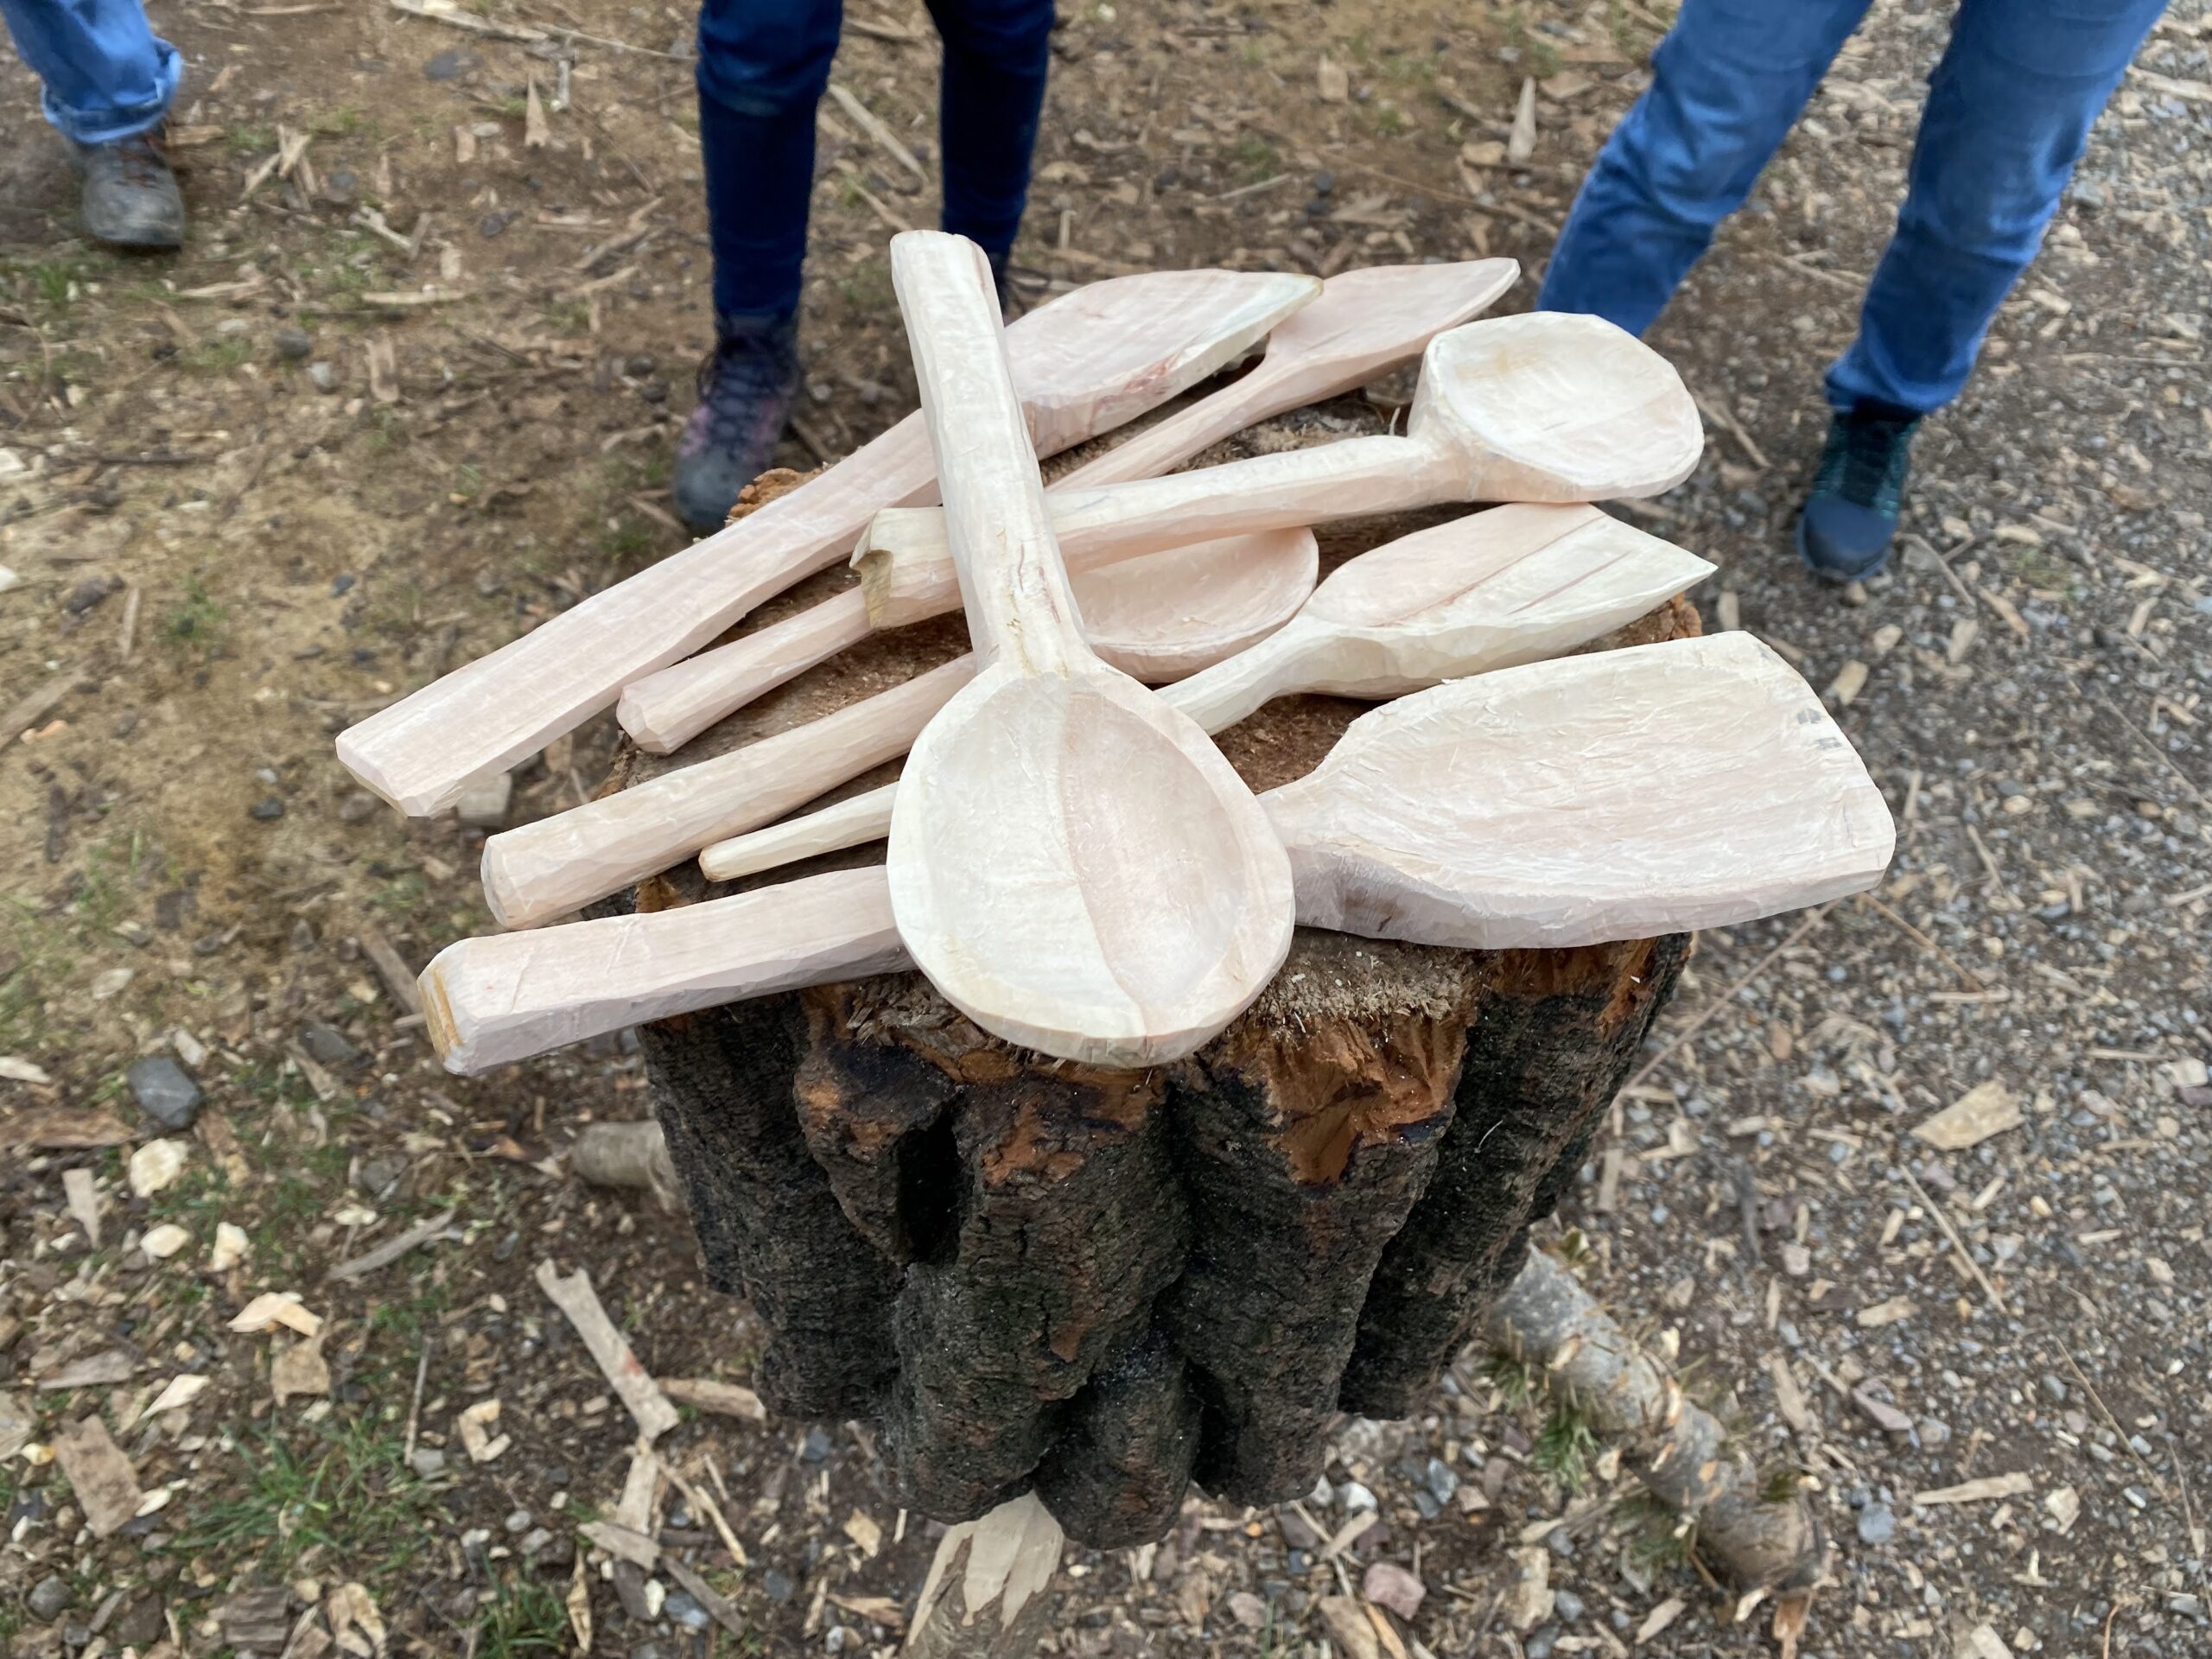 wood carved spoons